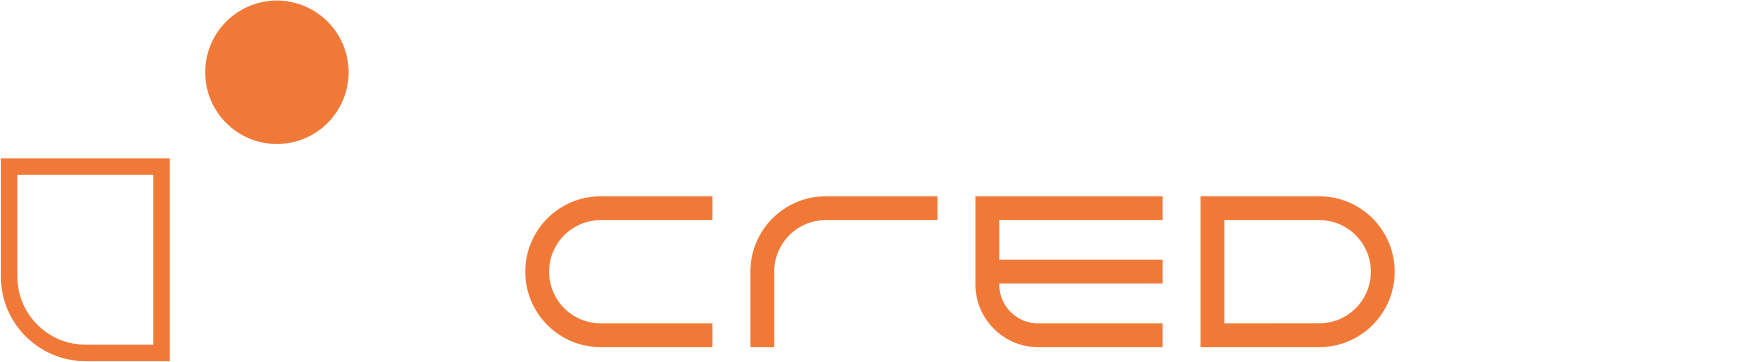 logo-wallecred-white